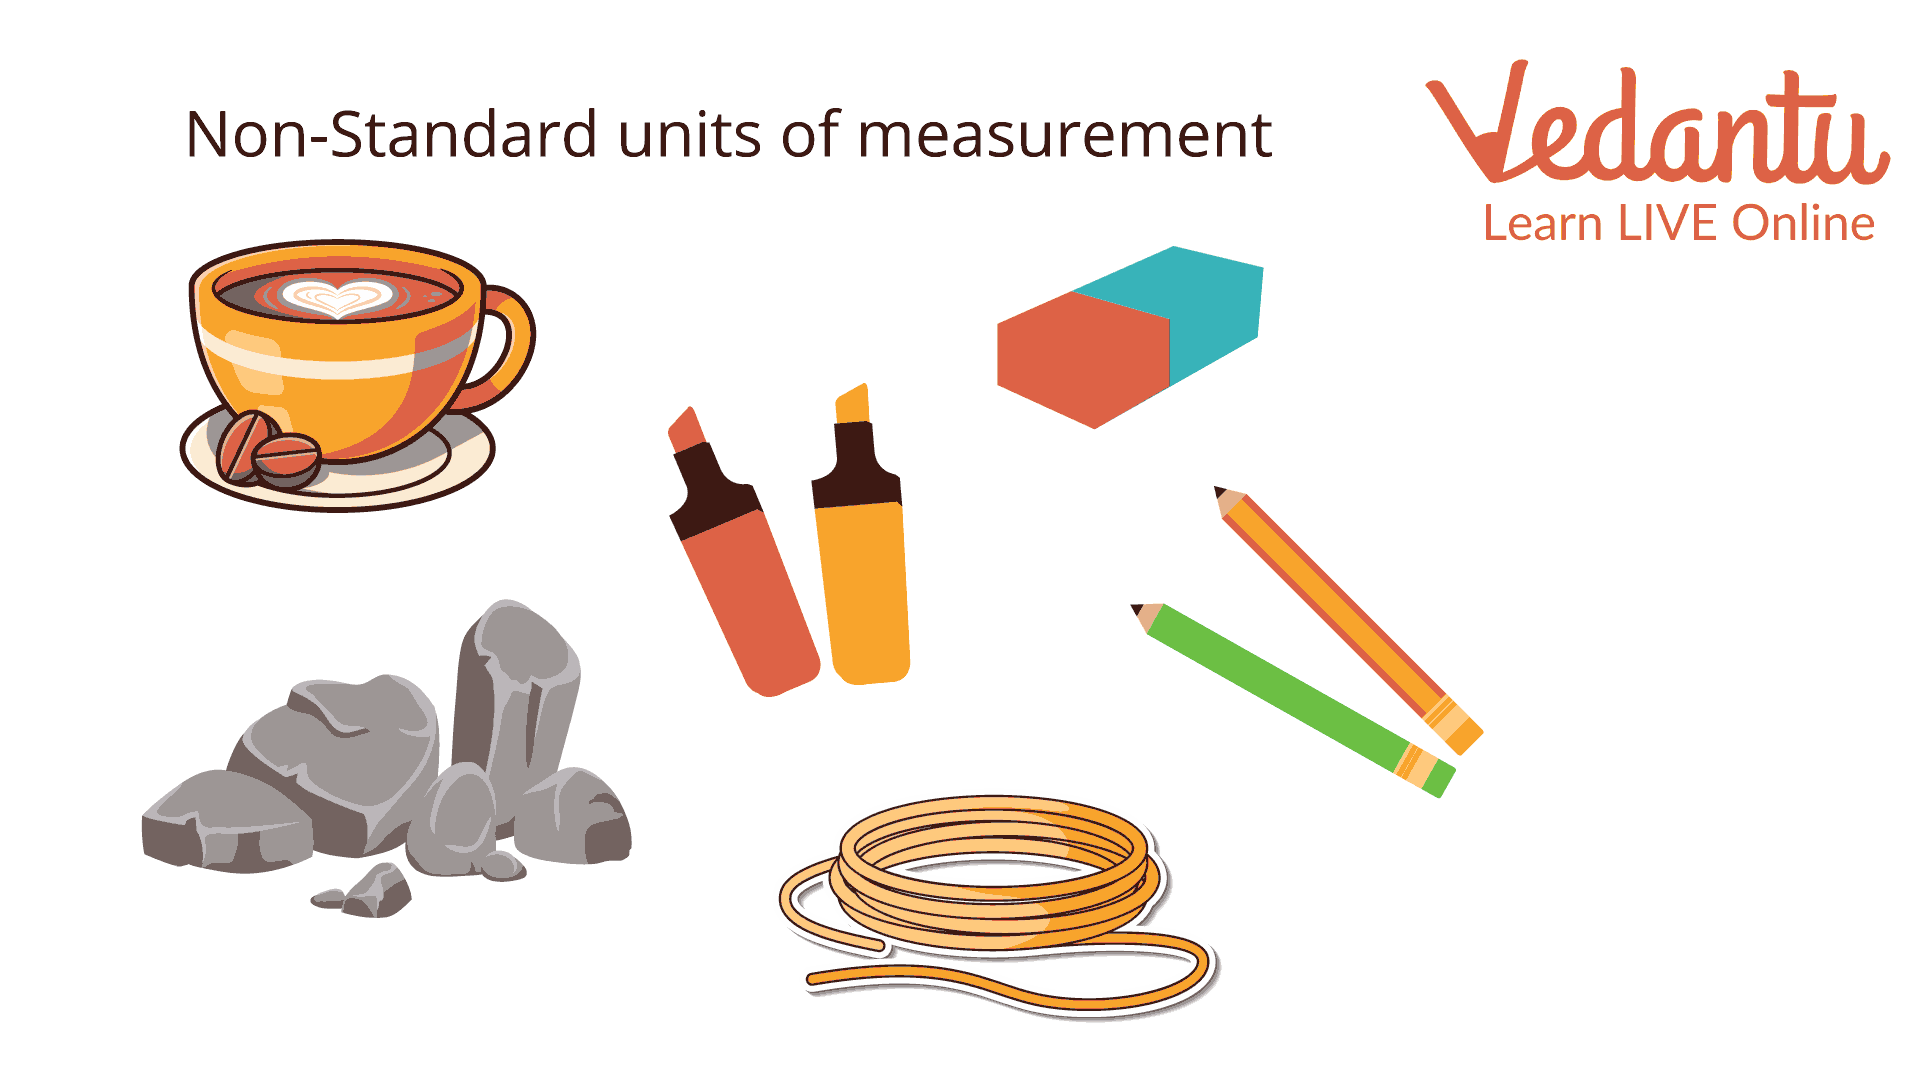 Non-Standard units of measurement